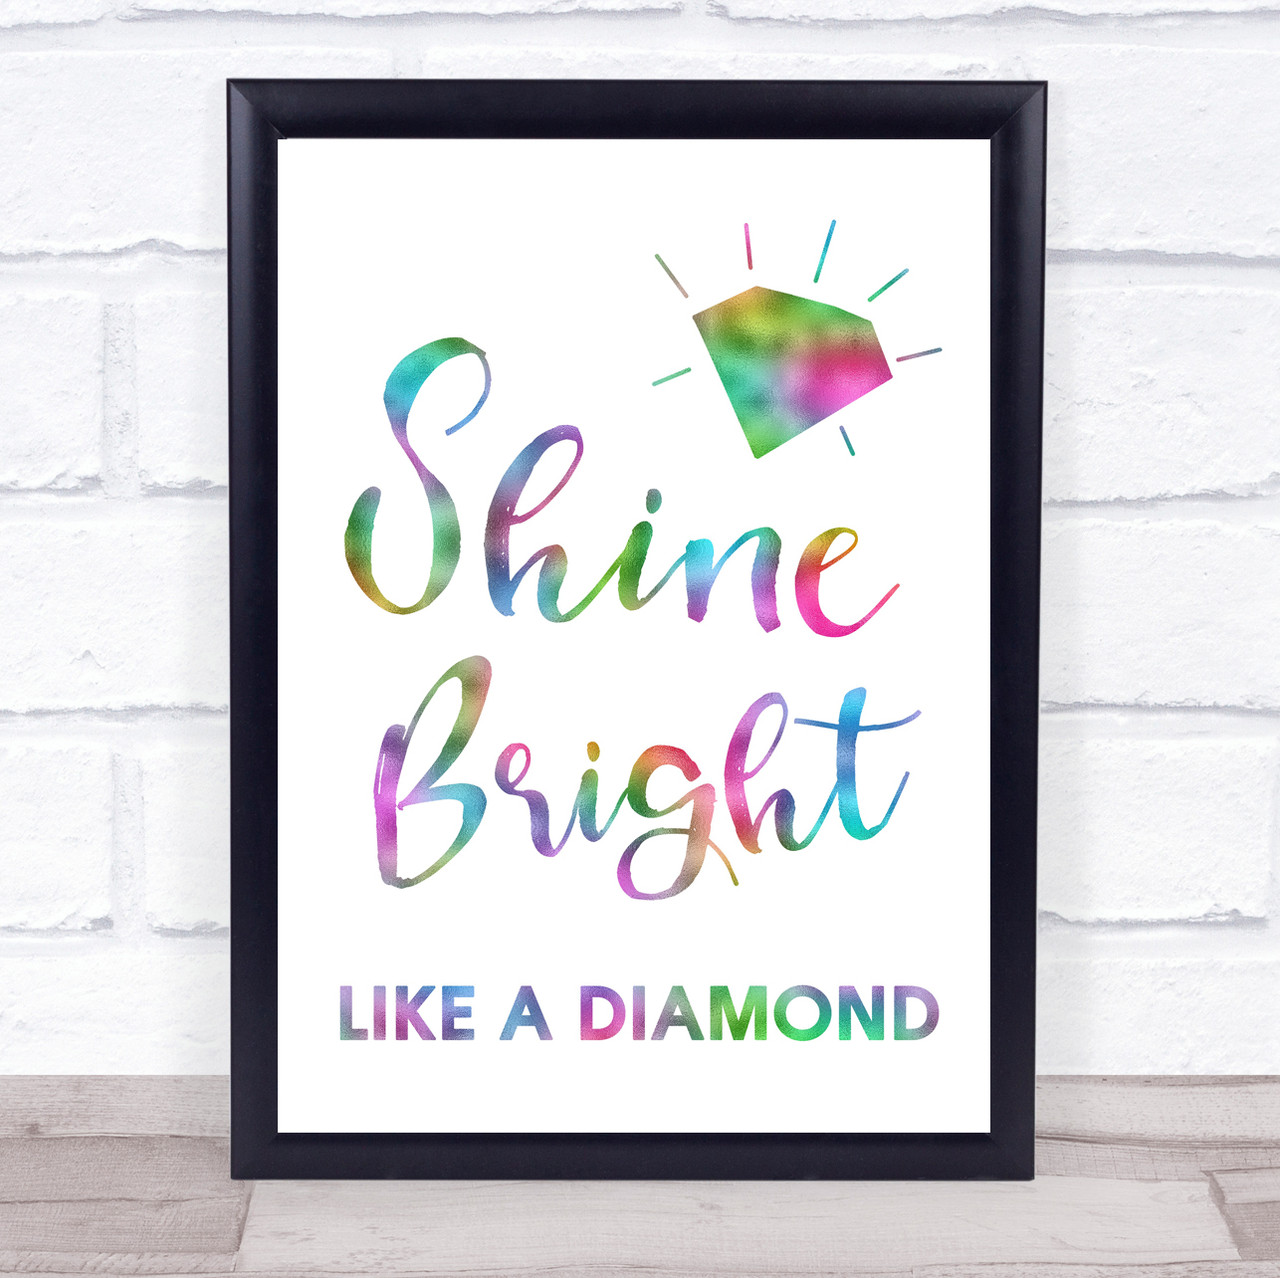 Shine Bright Like A Diamond | Art Board Print